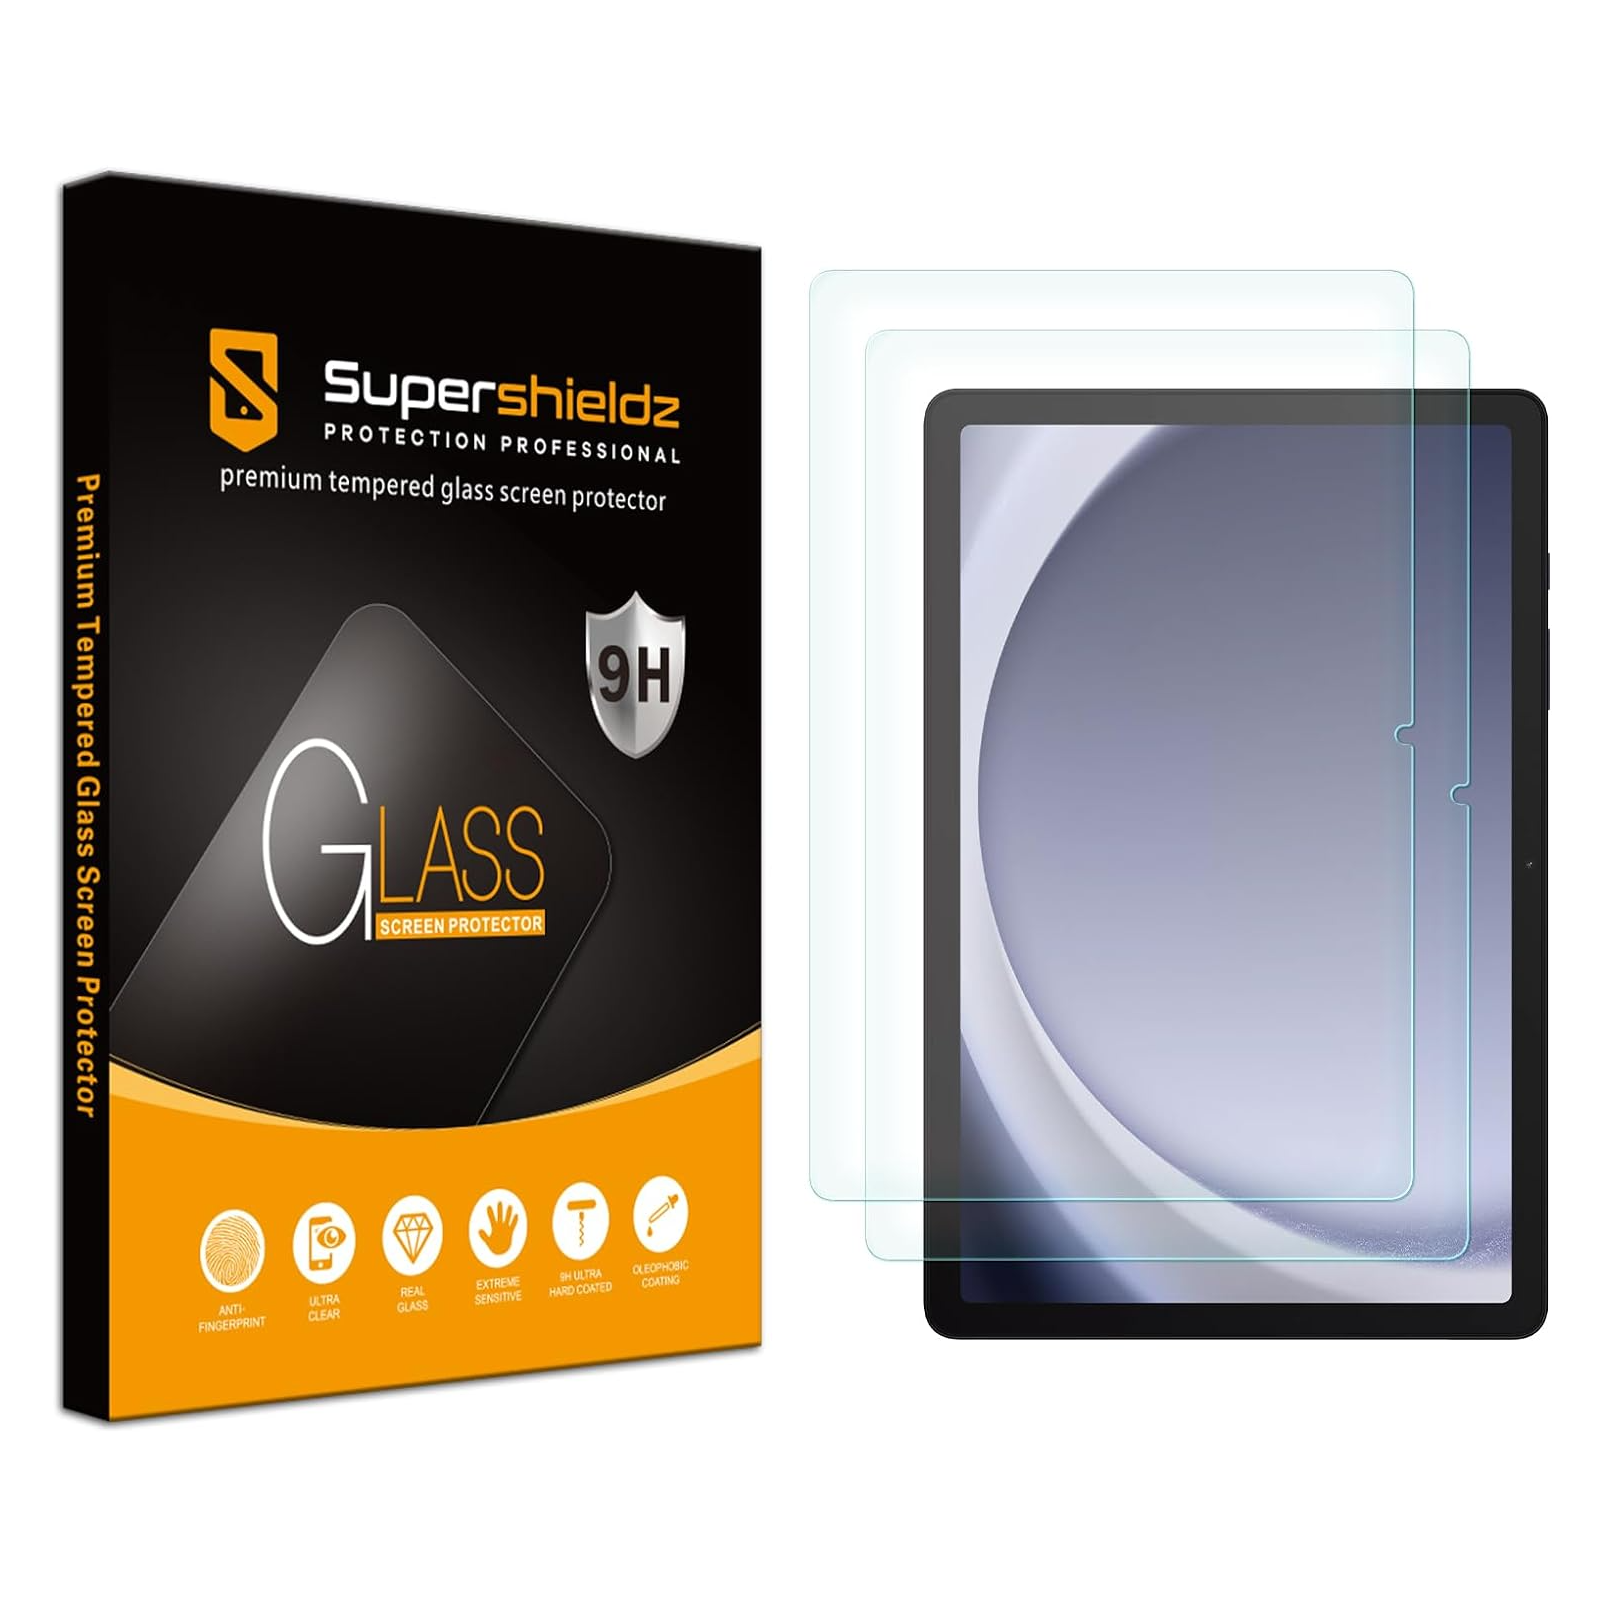 Embalagem Supershieldz Galaxy Tab A9 Plus, parte da tela e tablet